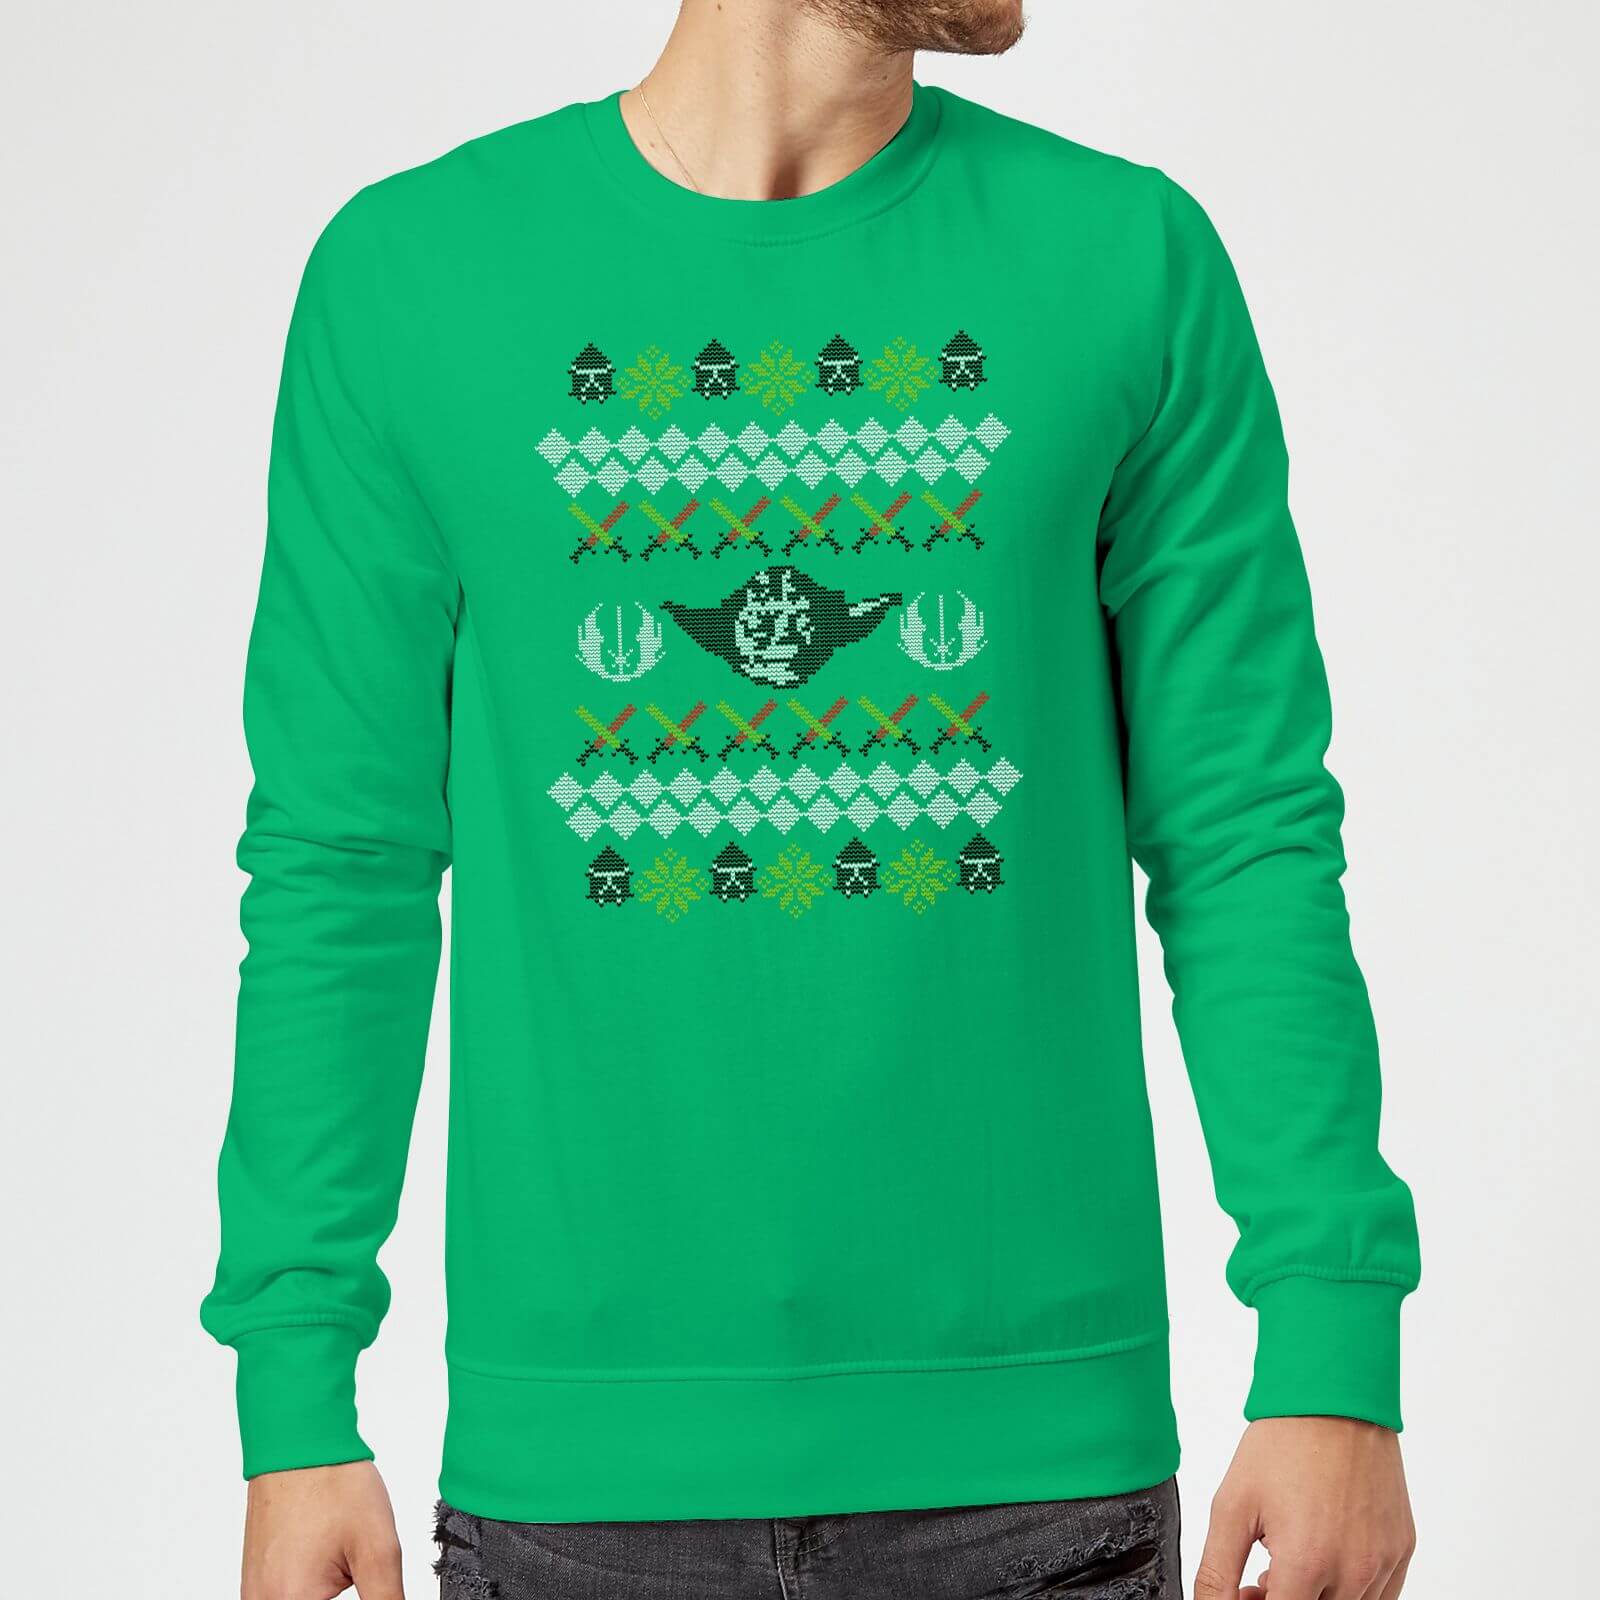 Star Wars Yoda Christmas Knit Green Christmas Sweatshirt - XXL - Green